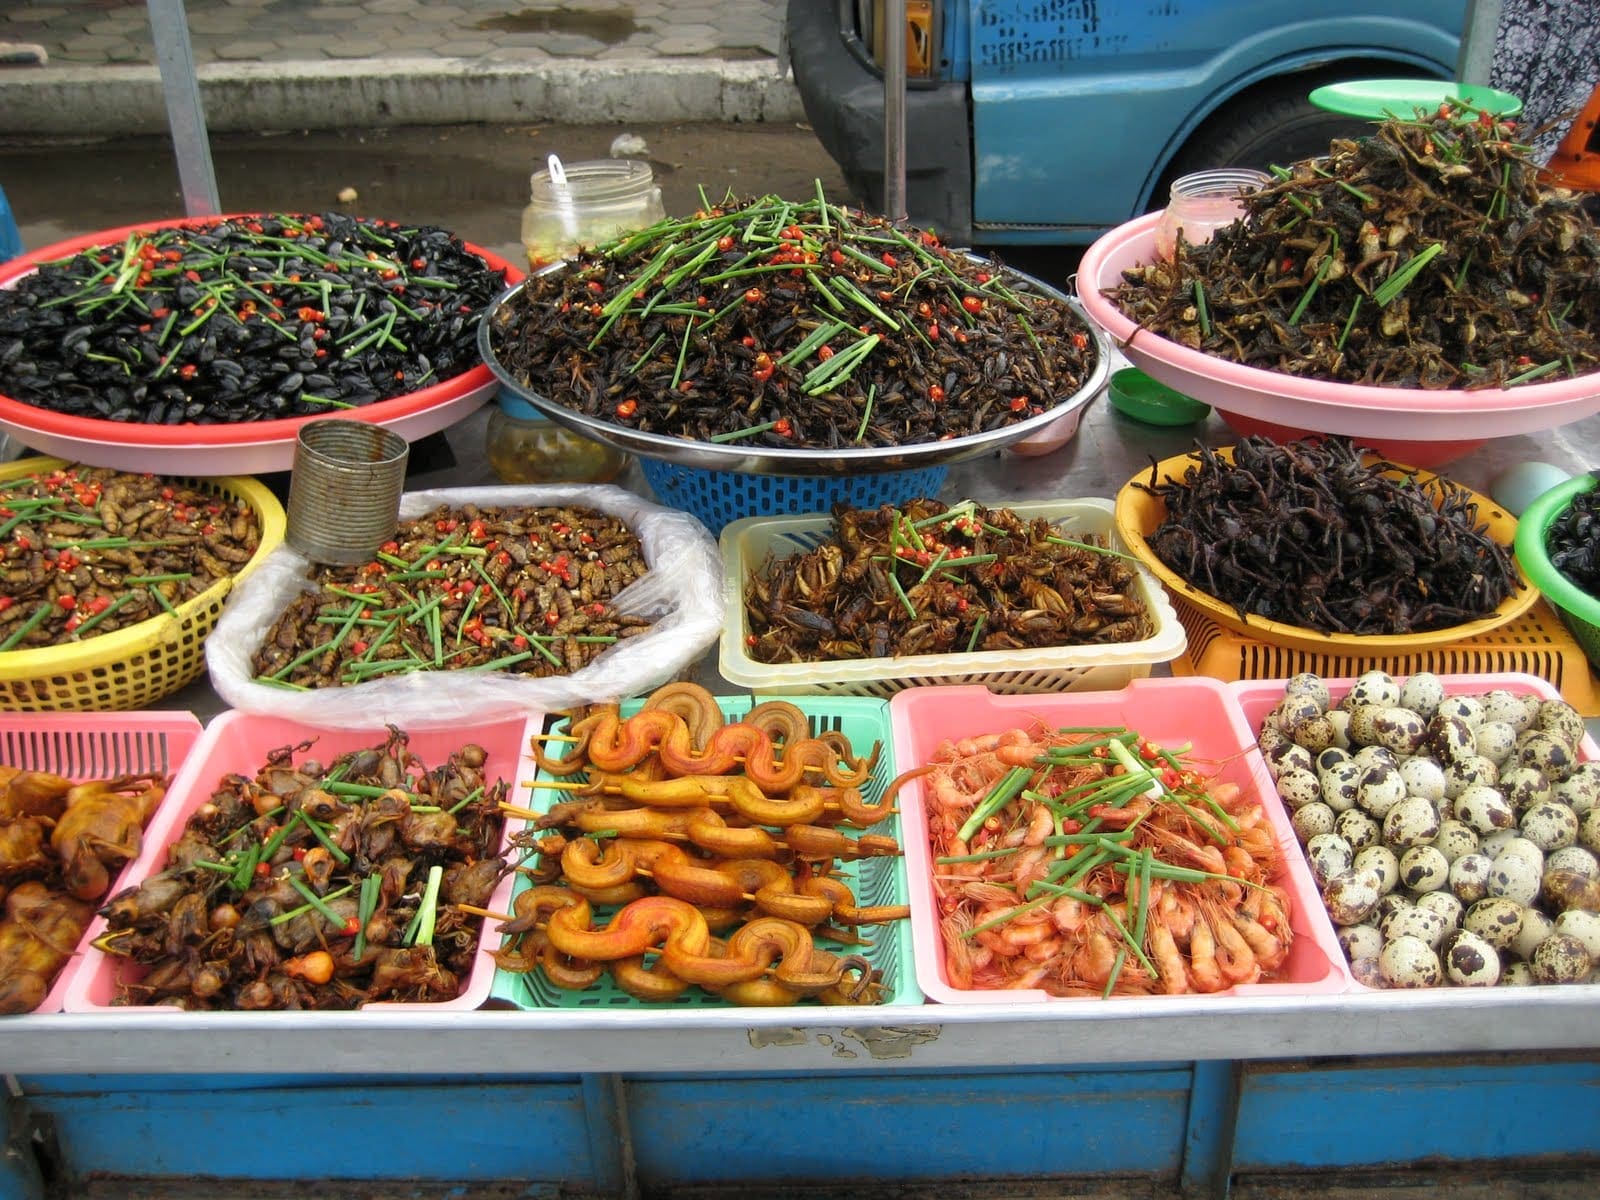 Street Food in Cambodia